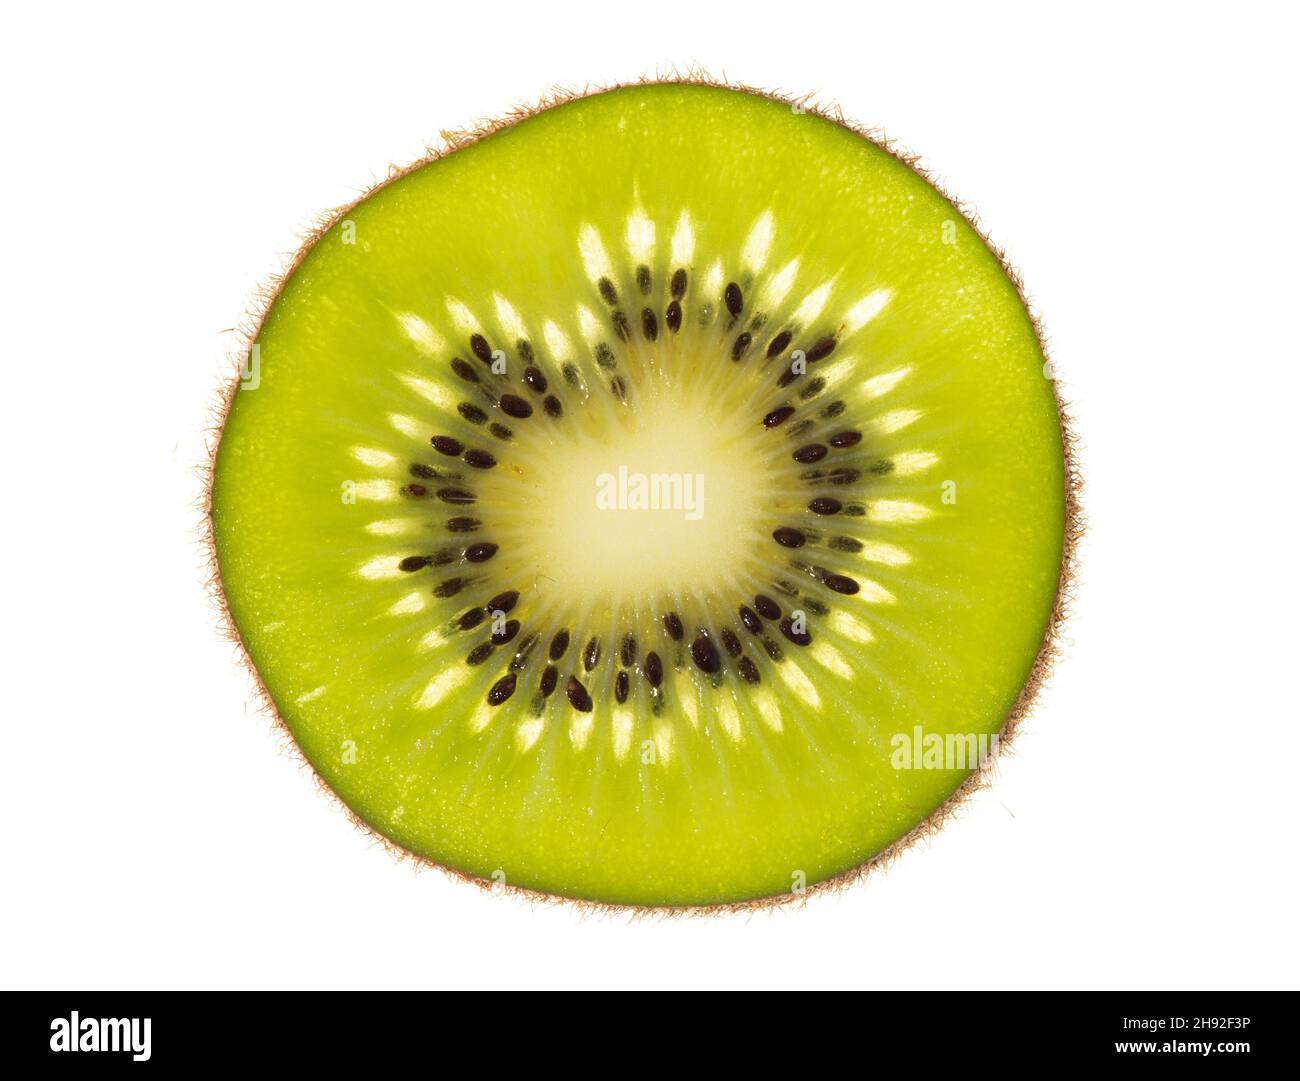 Single slice of a Kiwi fruit with back lighting Stock Photo